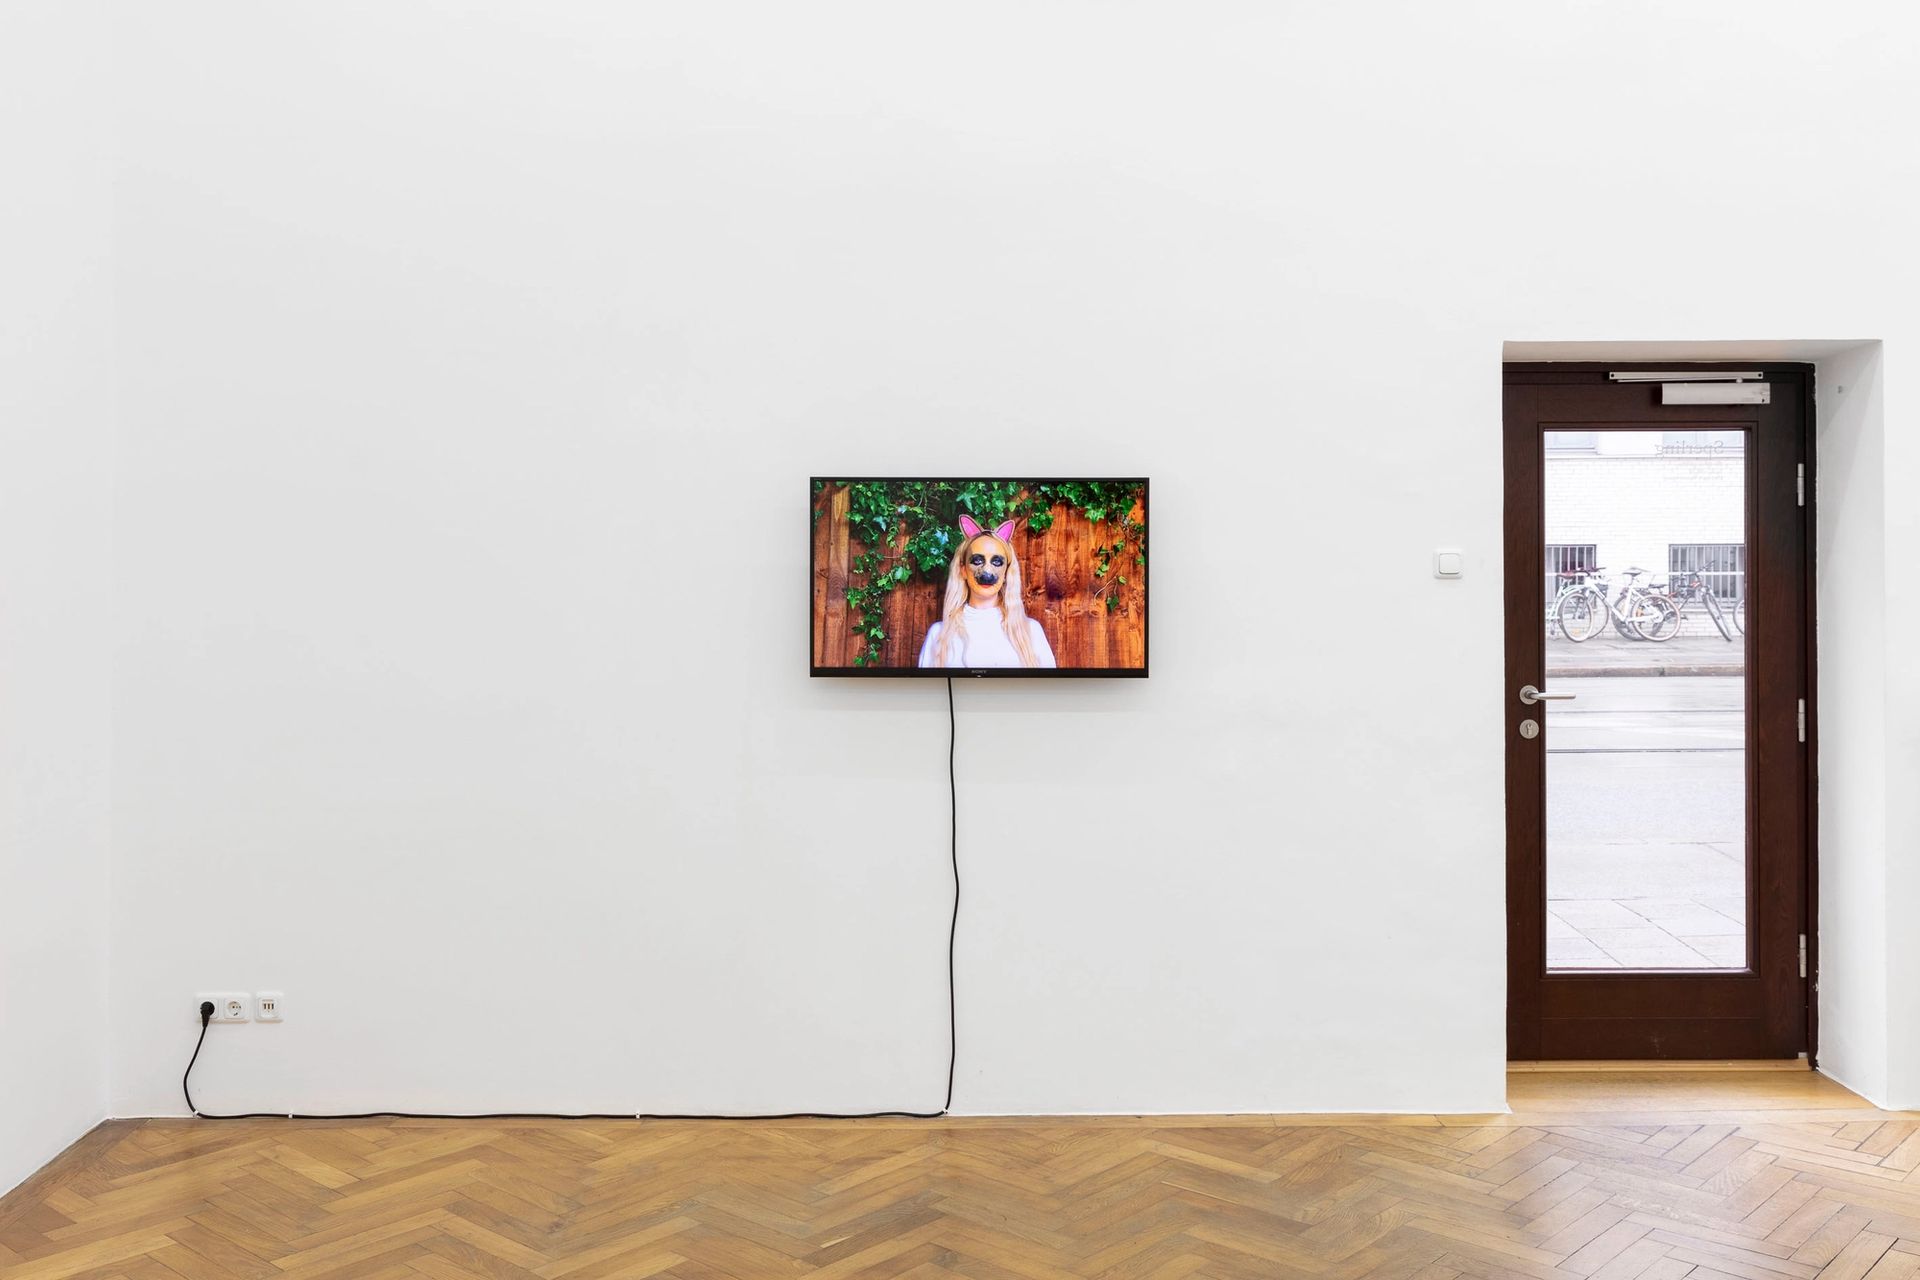 Marianna Simnett, “Tito’s Dog”, 2020, HD digital video, sound 6min, 56 sec, Courtesy the artist and Société, Berlin, photo: Sebastian Kissel